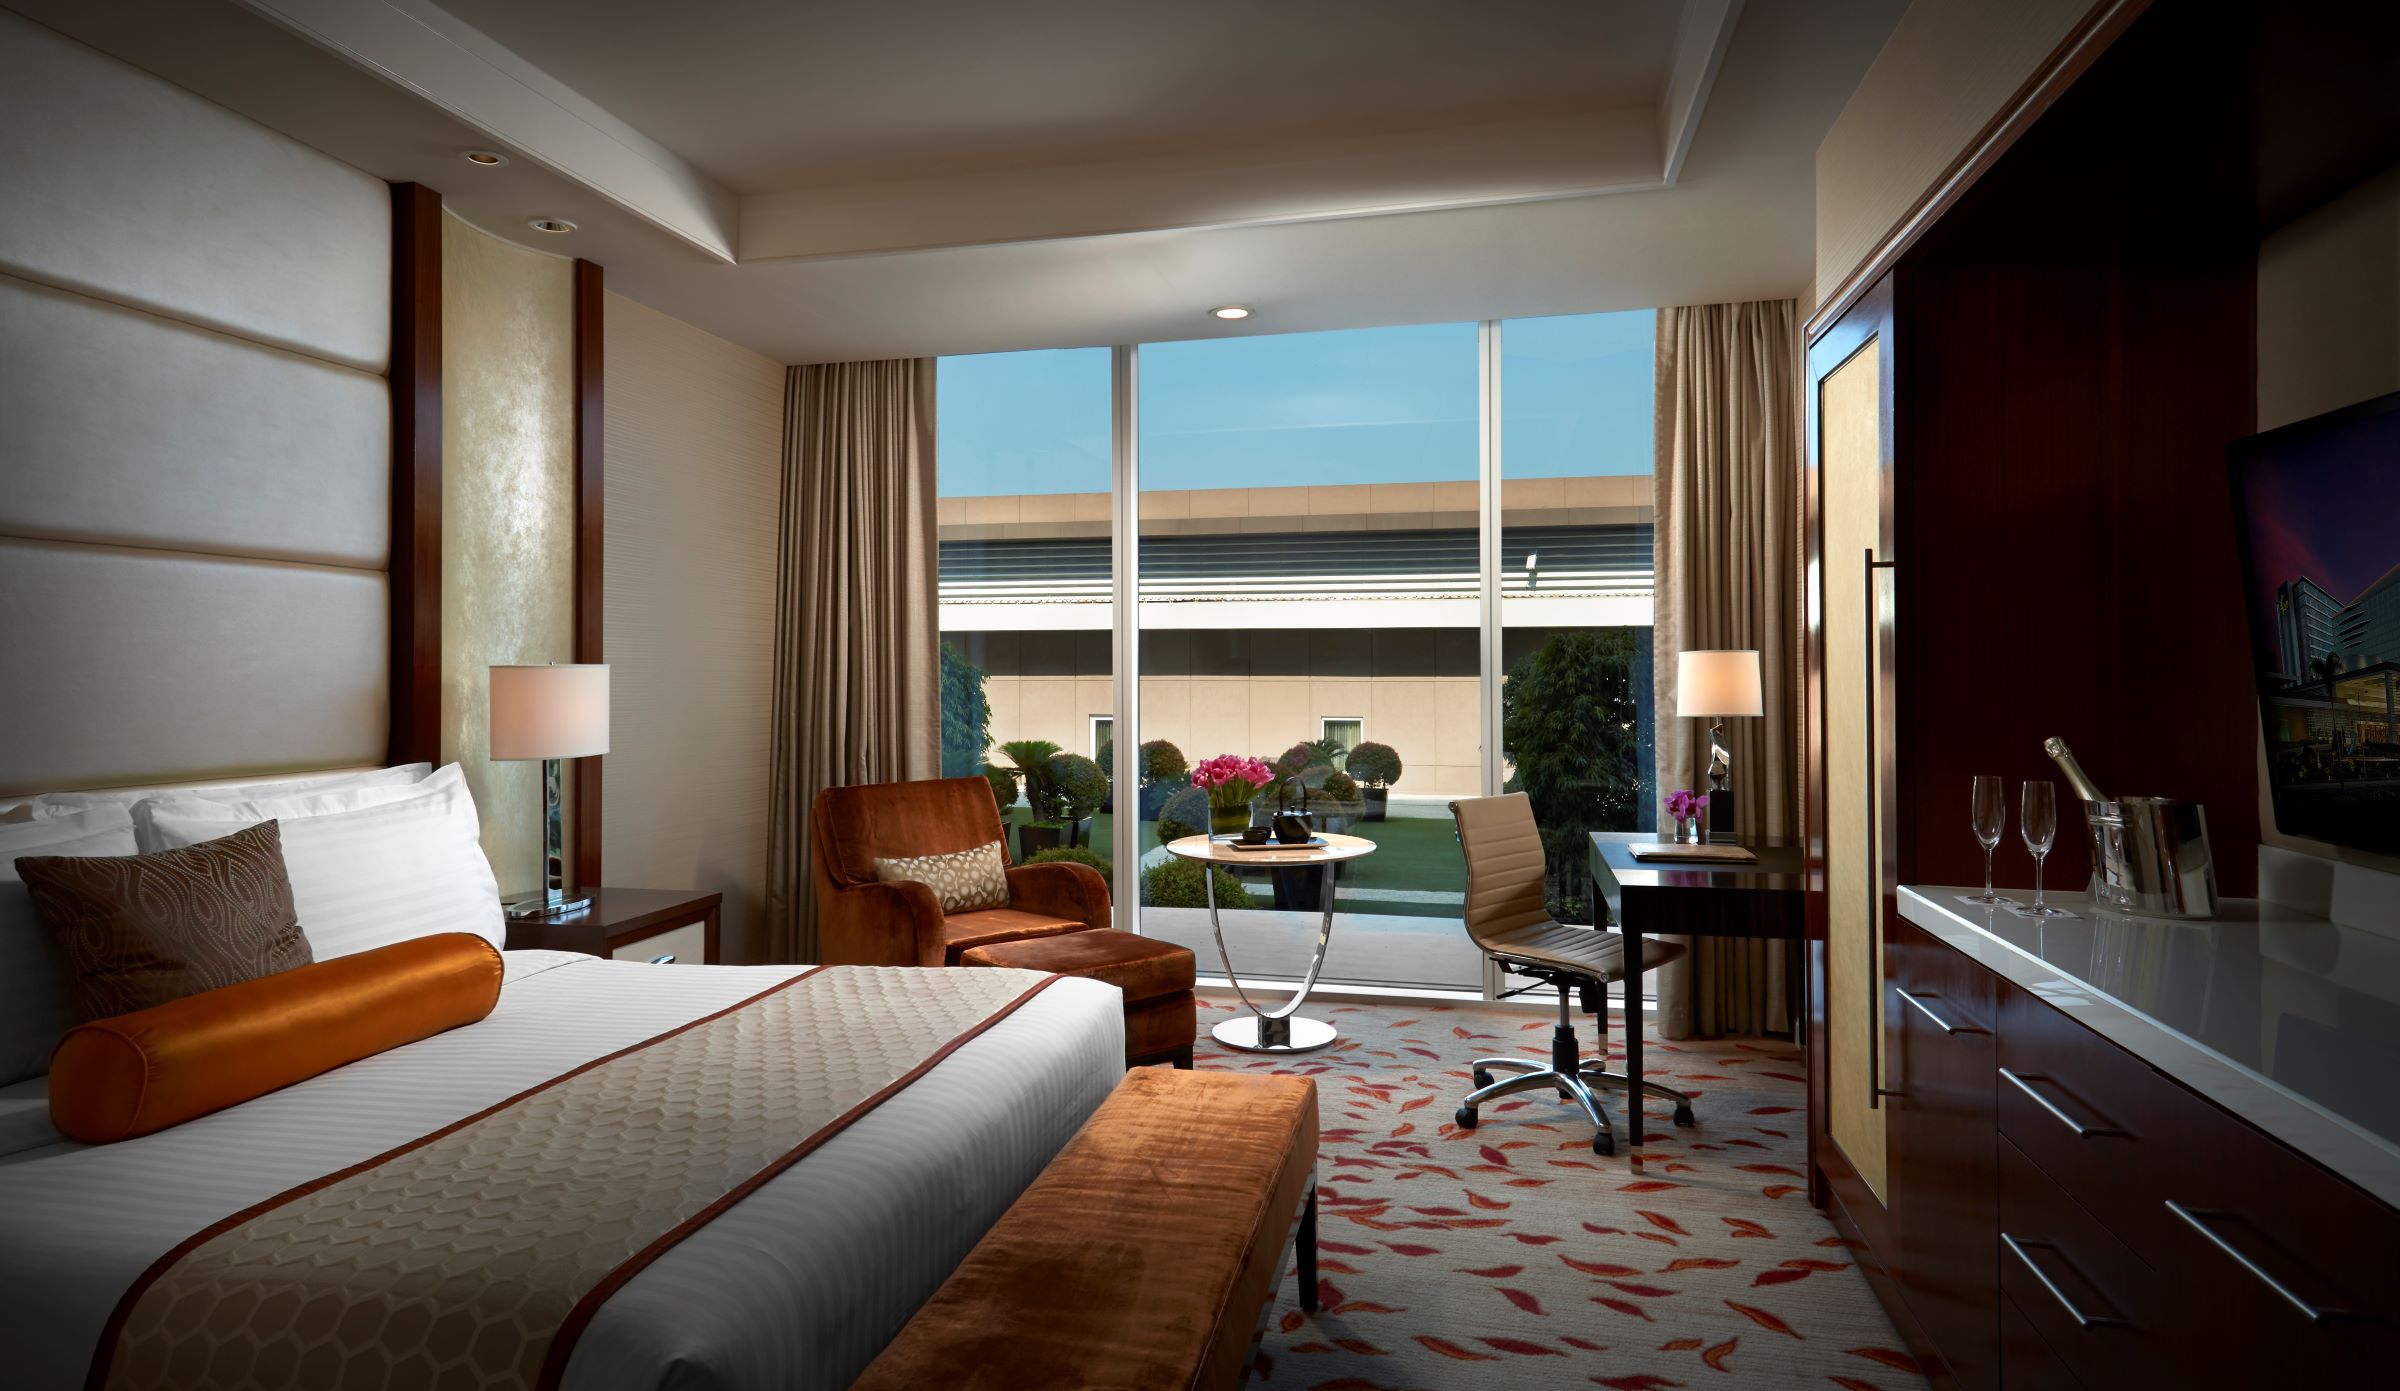 Solaire Resort Entertainment City, Paranaque @USD 139 - Solaire Resort  Entertainment City Price, Address & Reviews